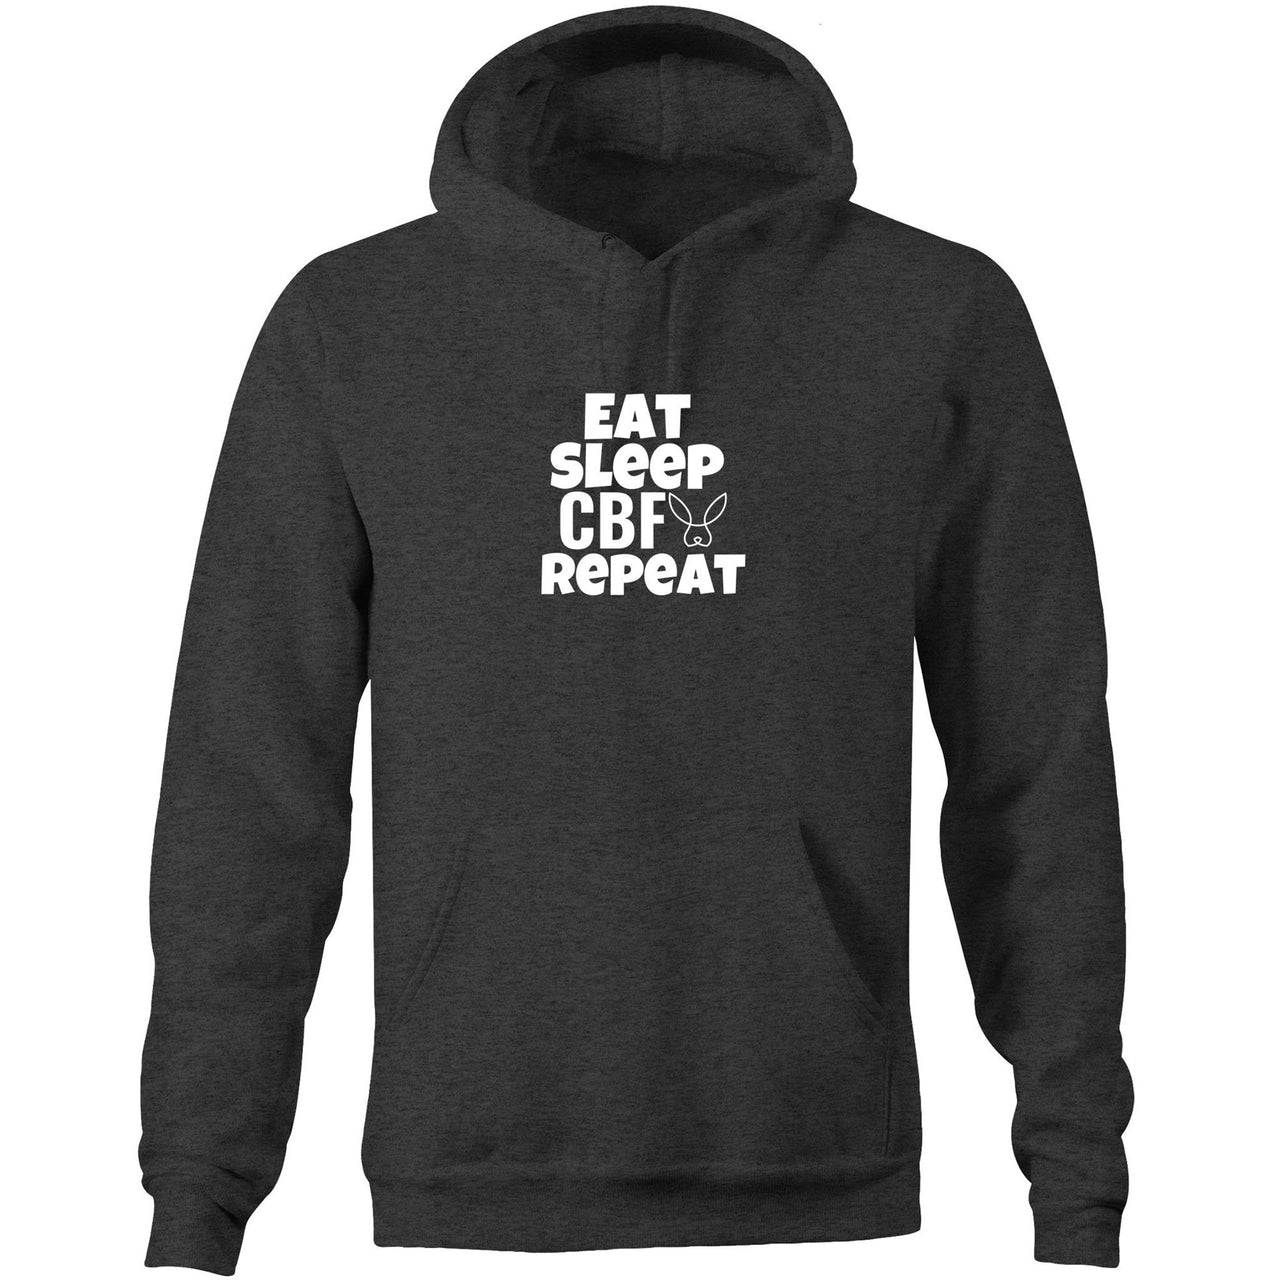 Eat Sleep CBF Repeat Pocket Hoodie Sweatshirt Charcoal by CBF Clothing